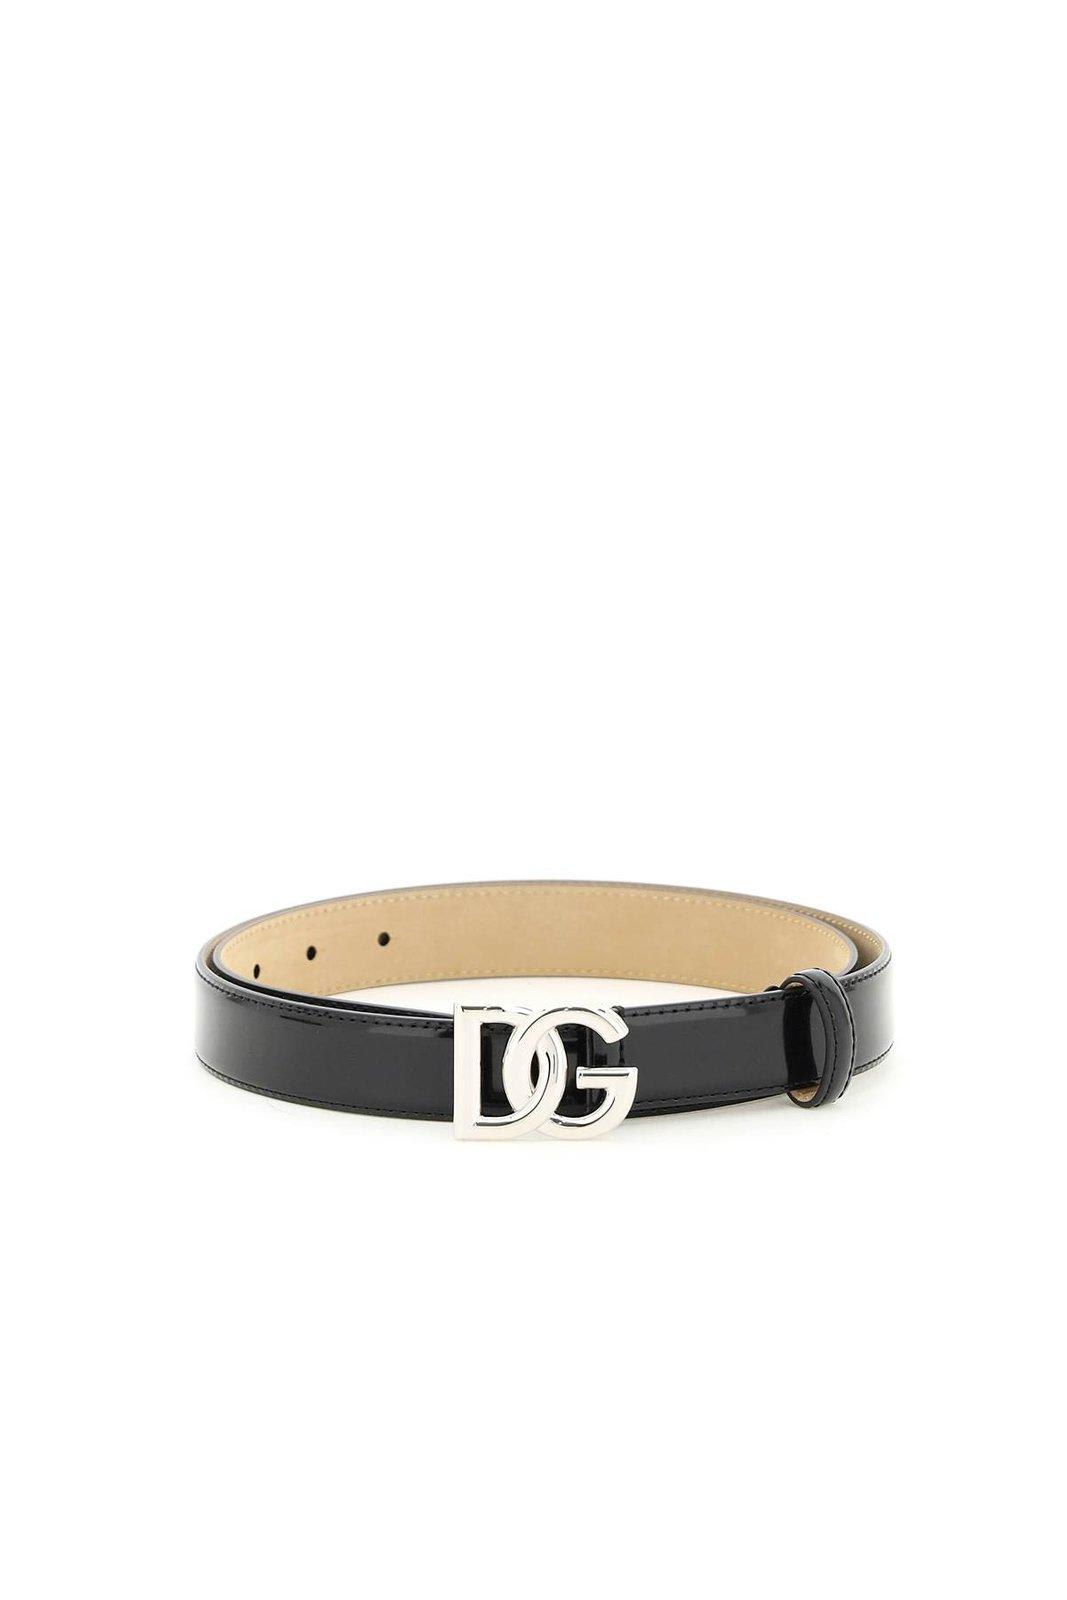 Dolce & Gabbana Dg Logo Shiny Belt